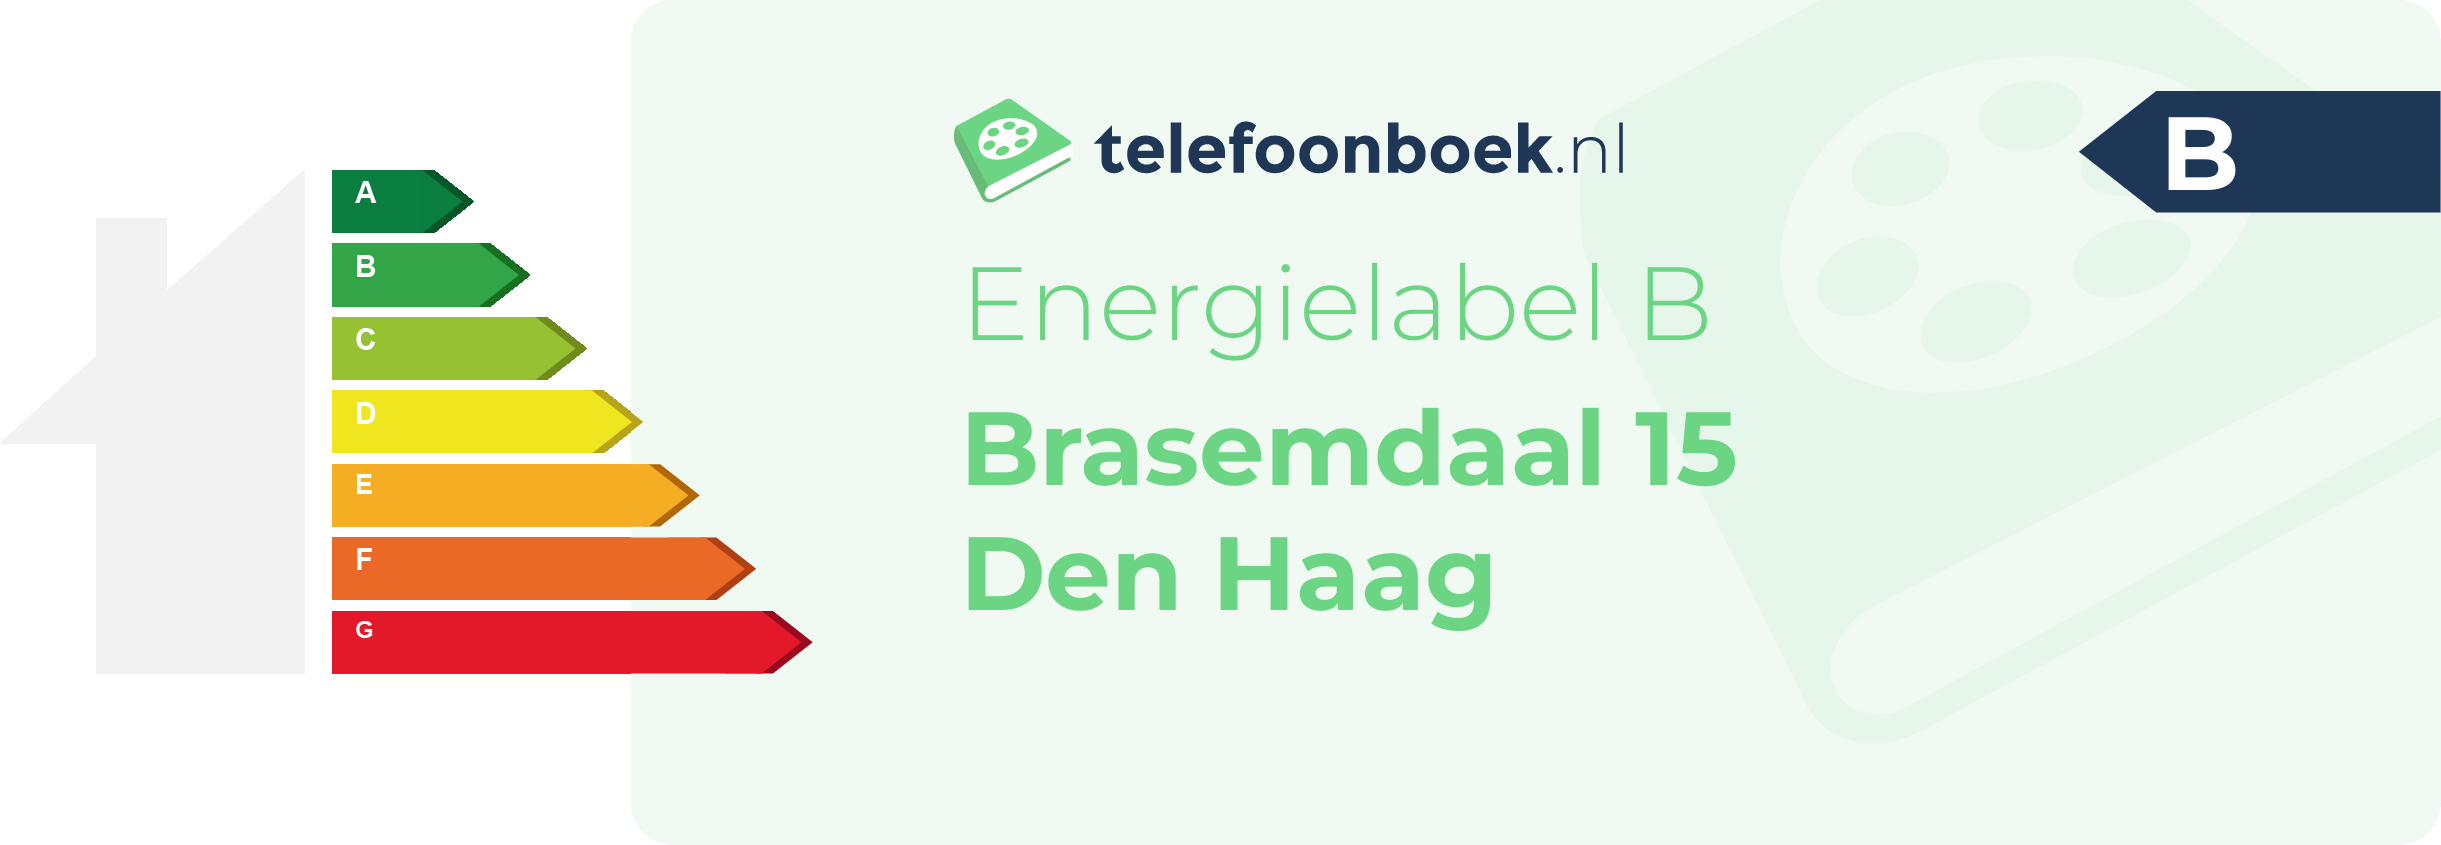 Energielabel Brasemdaal 15 Den Haag